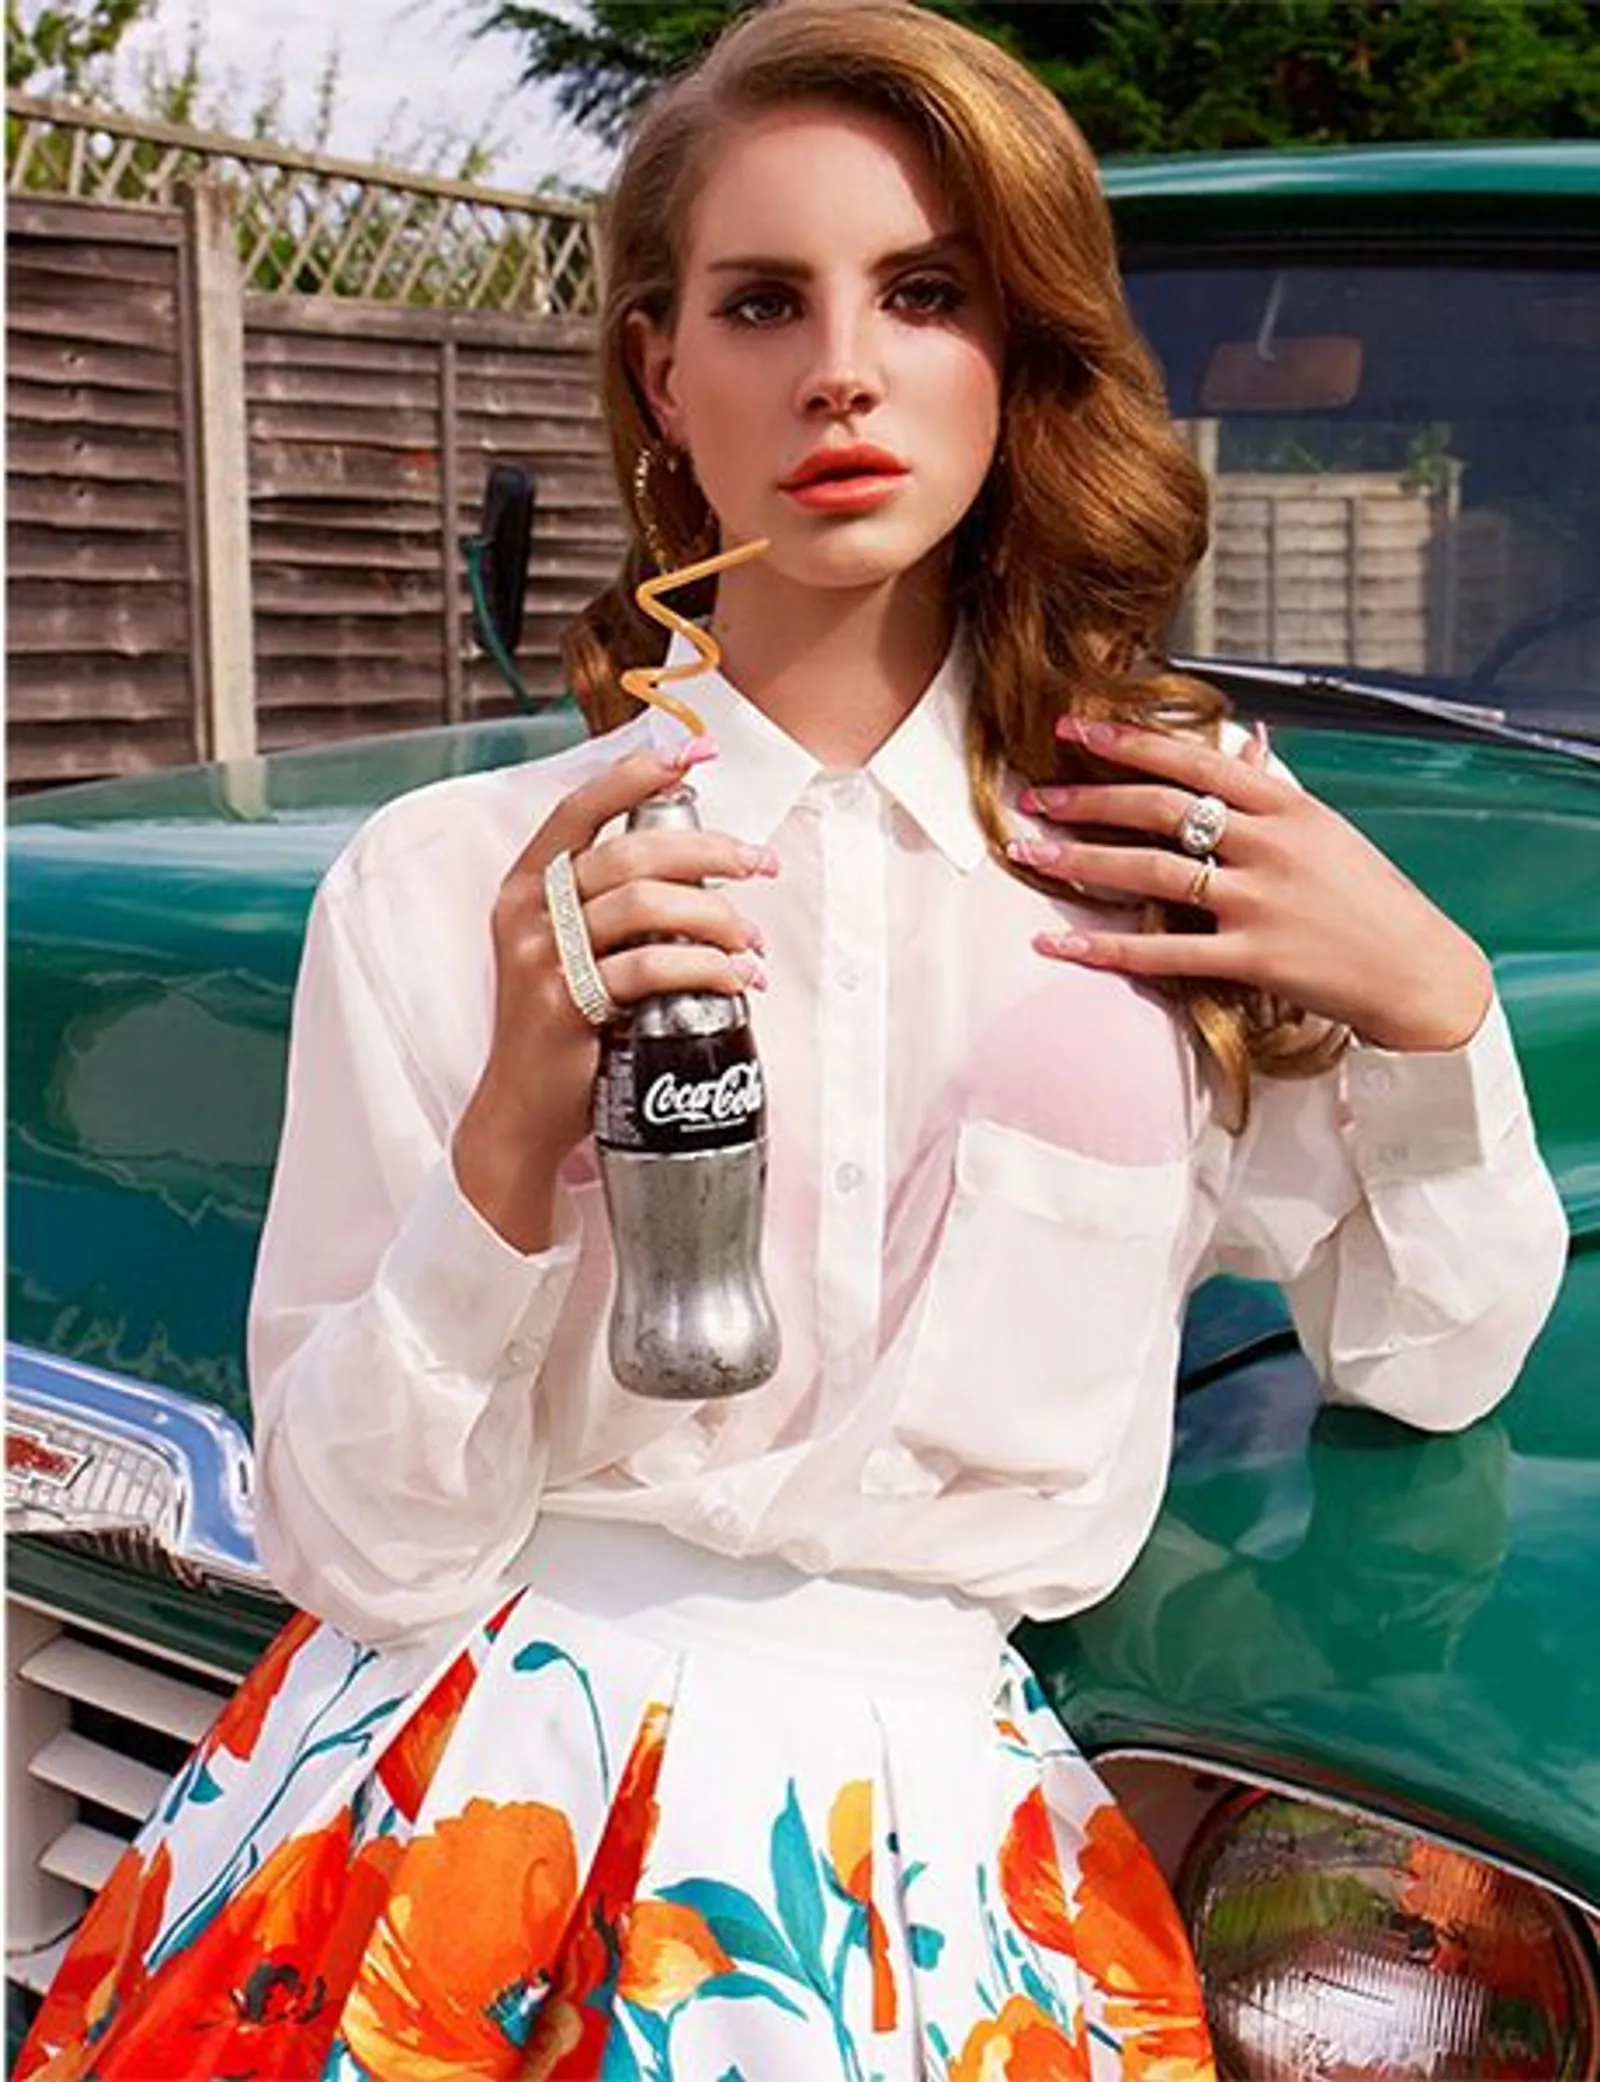 Selalu Tampil Unik, Yuk Contek Outfit Vintage a La Lana Del Rey